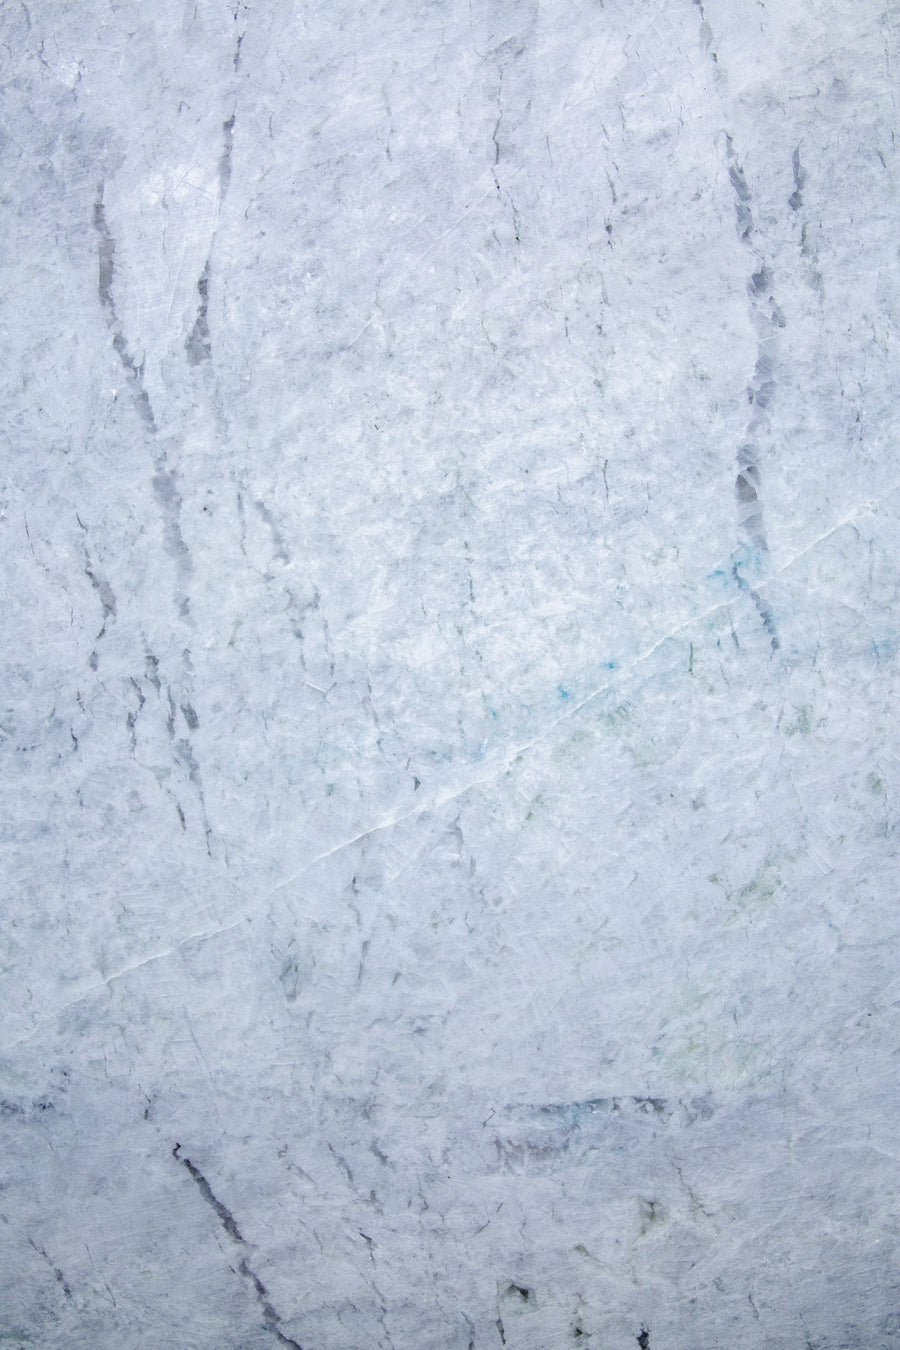 Light blue stone photography surface